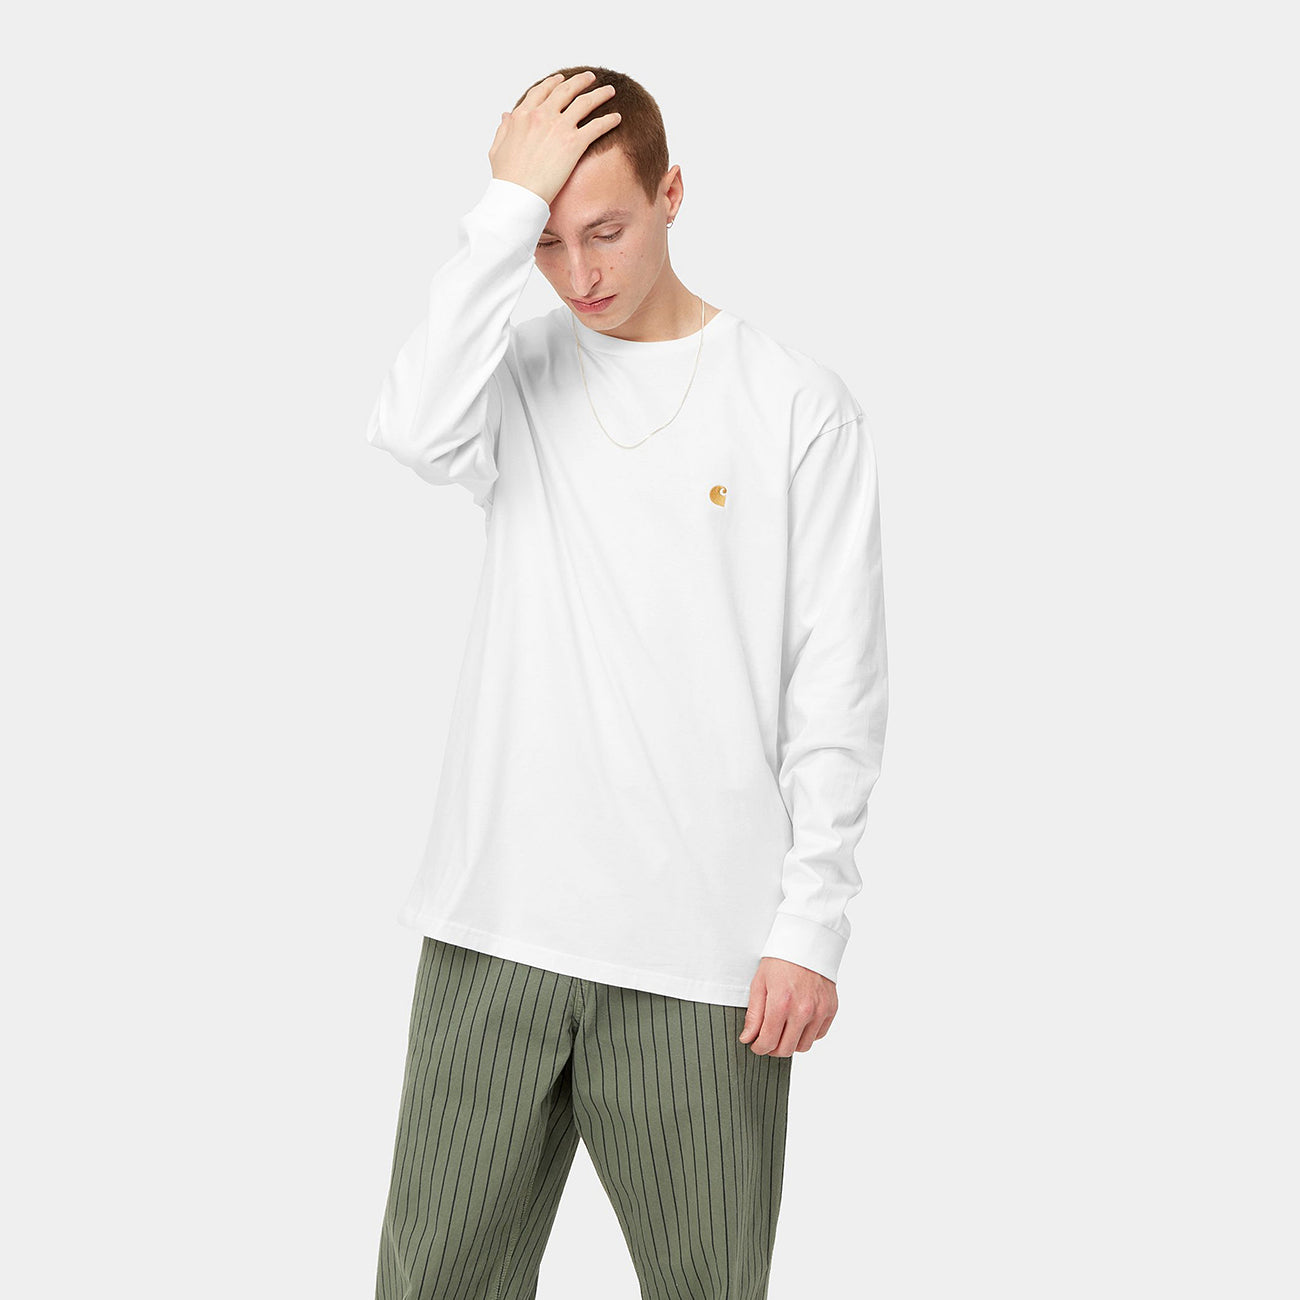 Chase LS T-Shirt - White/Gold